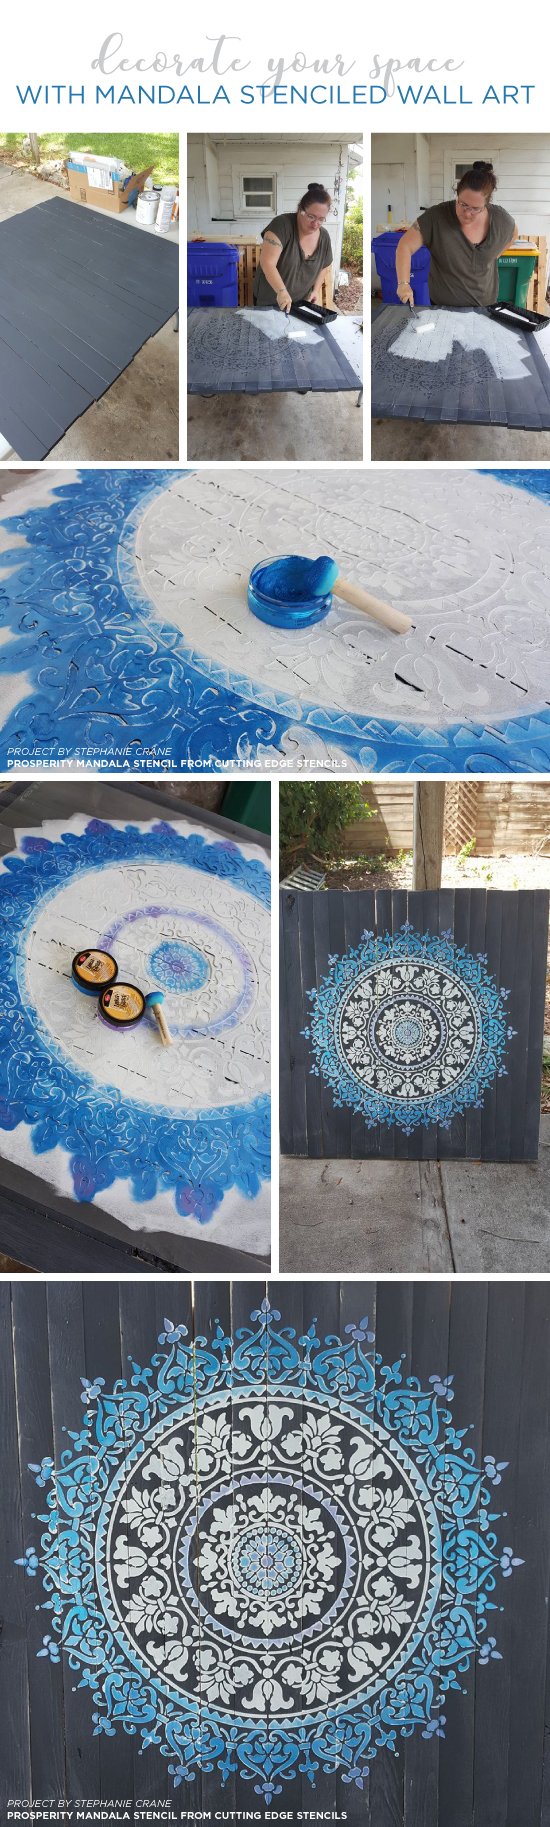 Cutting Edge Stencils shares how to stencil DIY reclaimed wood wall art using a Mandala Stencil pattern.  http://www.cuttingedgestencils.com/prosperity-mandala-stencil-yoga-mandala-stencils-designs.html